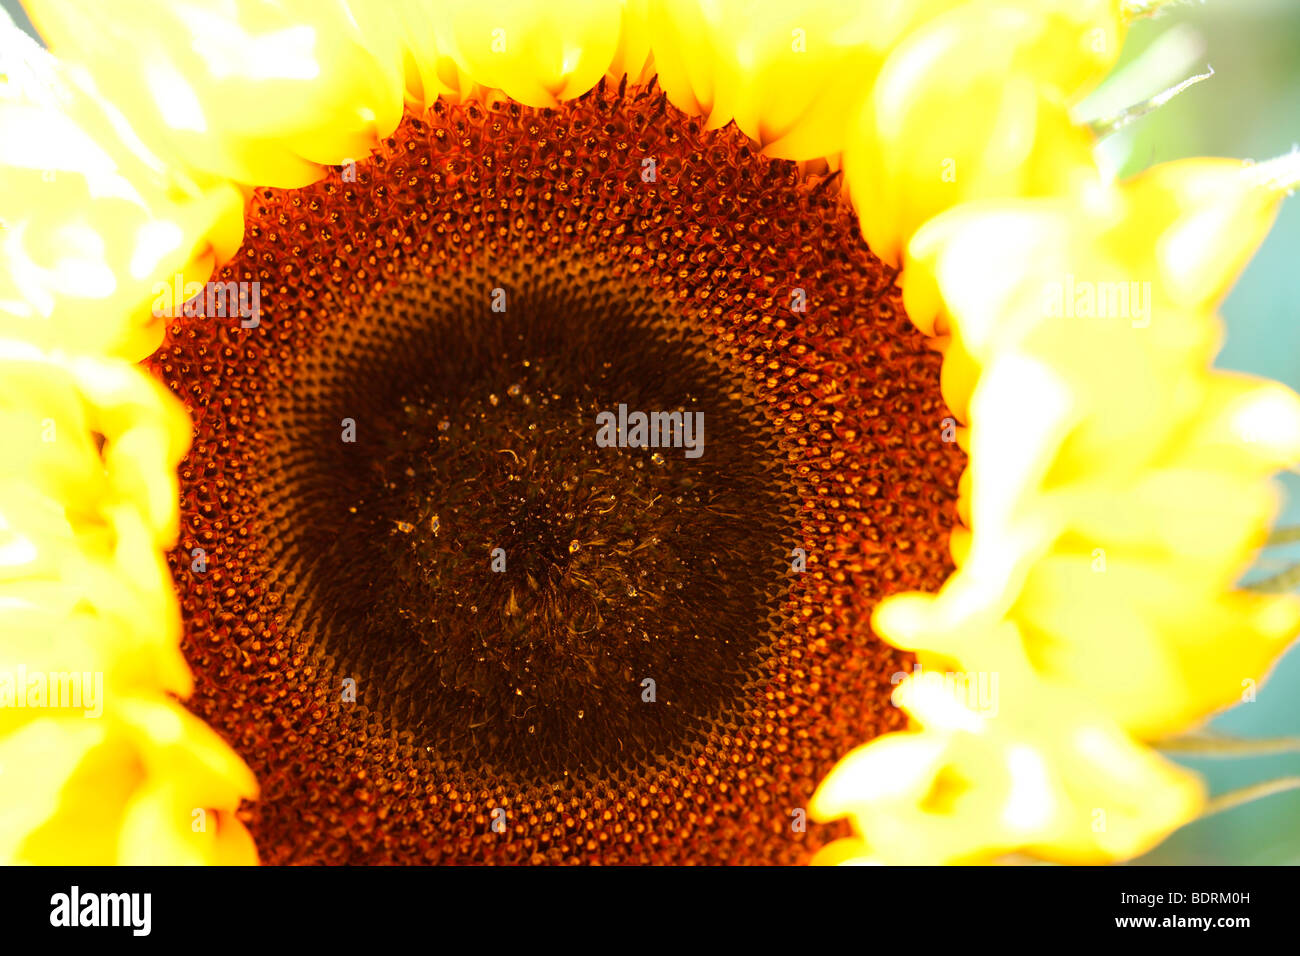 striking impressive sunflower head - fine art photography Jane-Ann Butler Photography JABP583 Stock Photo